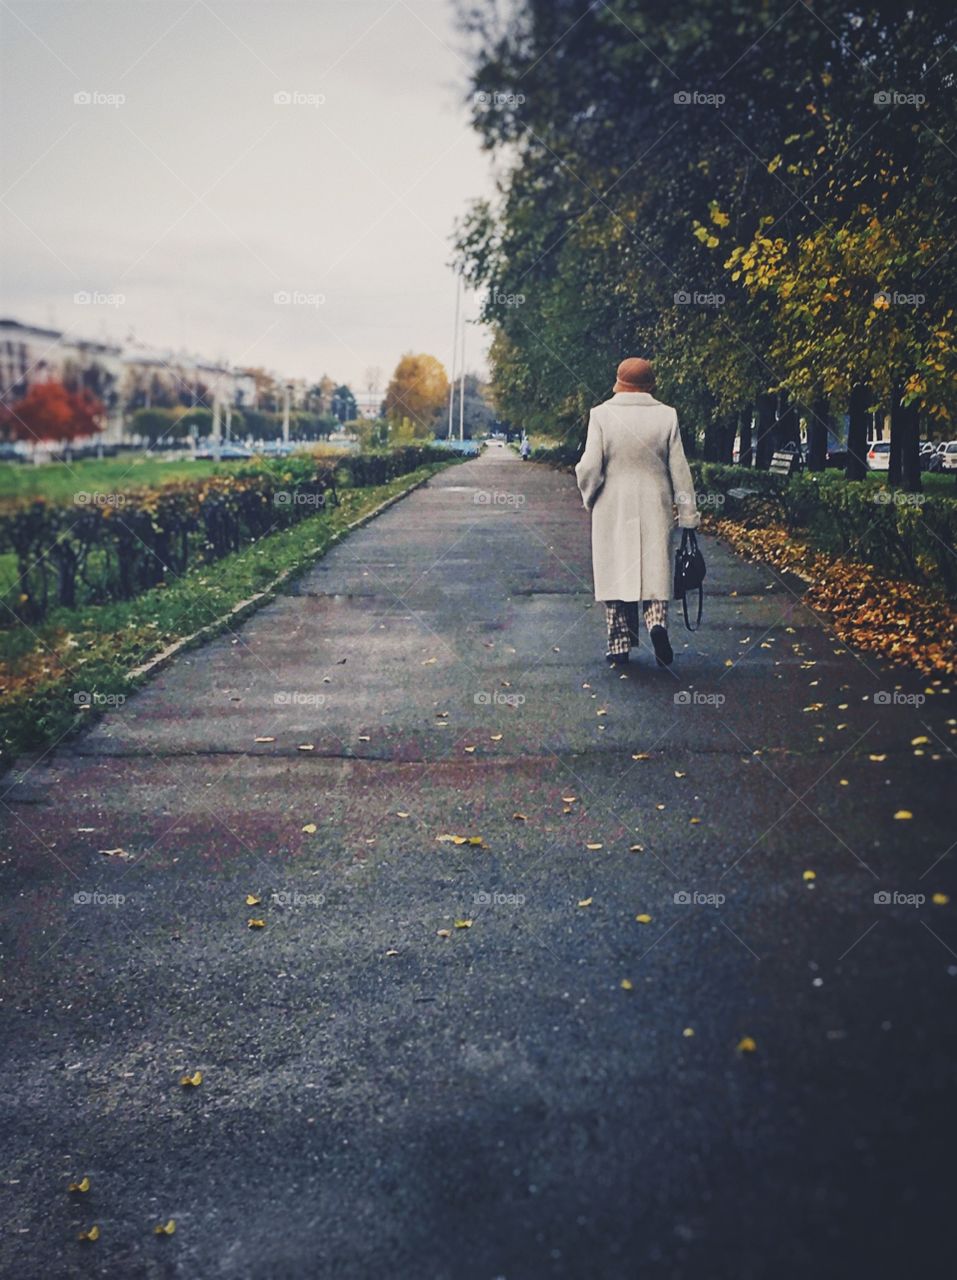 The elegant elderly lady walking alone in the autumn alley.